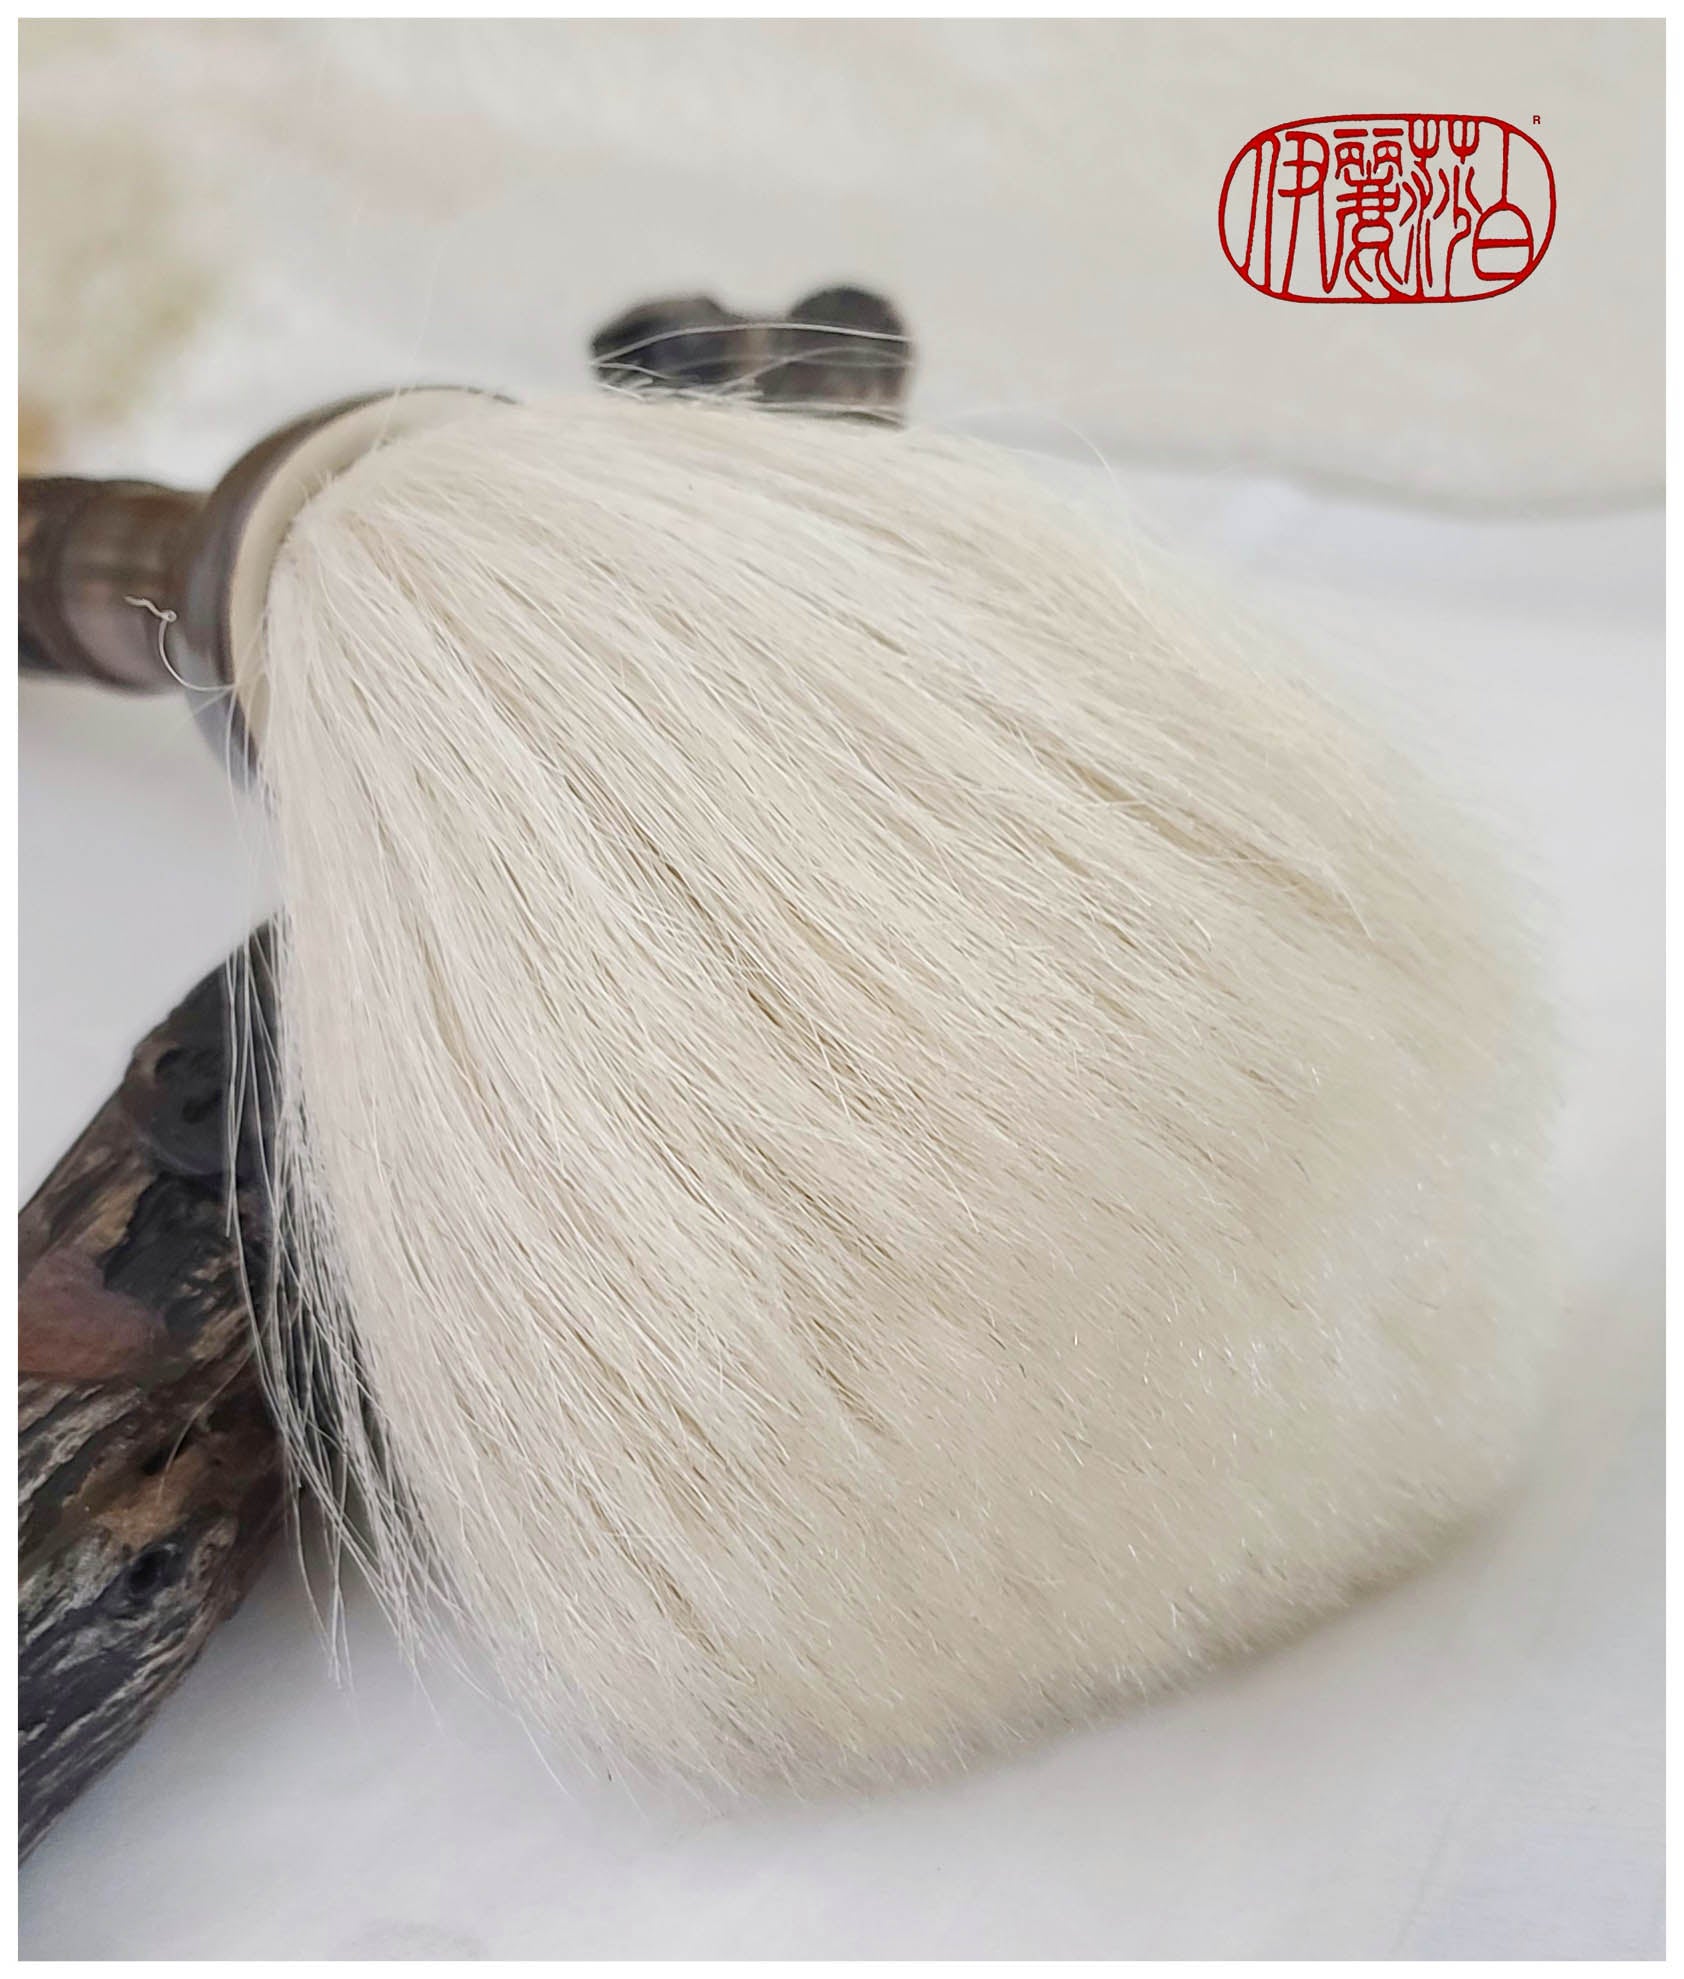 Gorgeous 6" White Horsehair Sumi-e Paint Brush With Ceramic Ferrule PS6 Art Supplies Elizabeth Schowachert Art